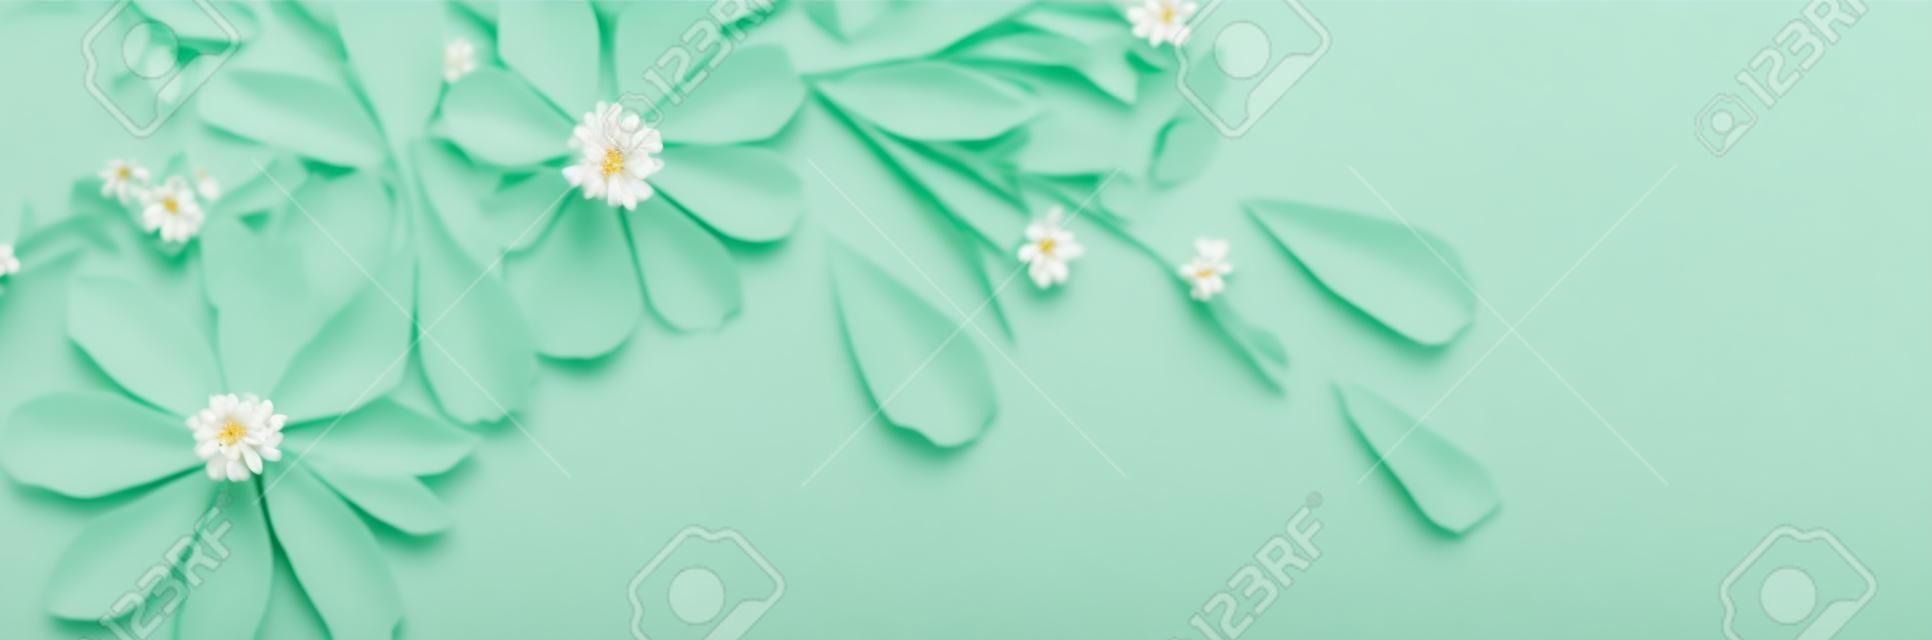 fiori bianchi su sfondo di carta verde